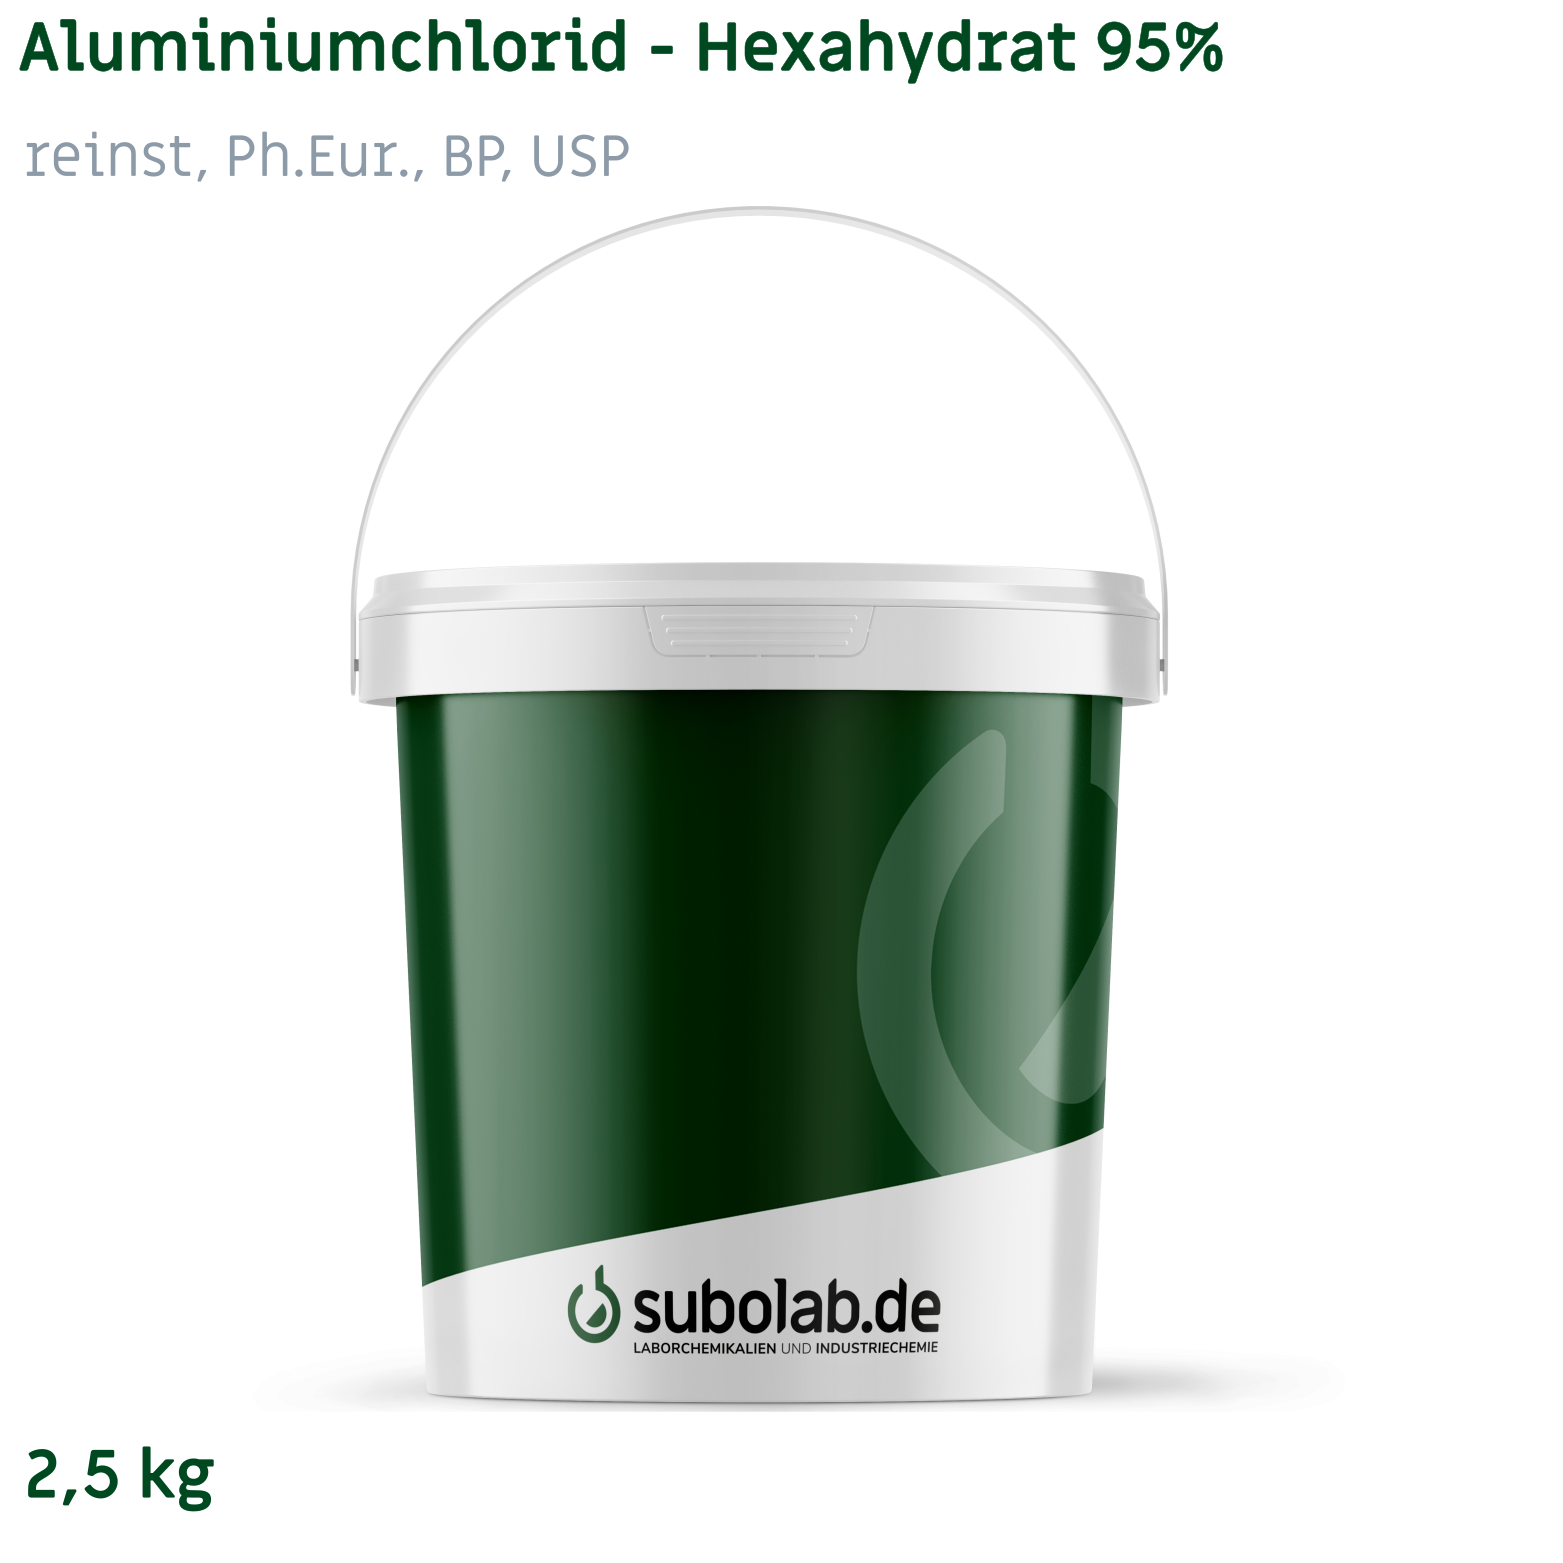 Bild von Aluminiumchlorid - Hexahydrat 95% reinst, Ph.Eur., BP, USP (2,5 kg)